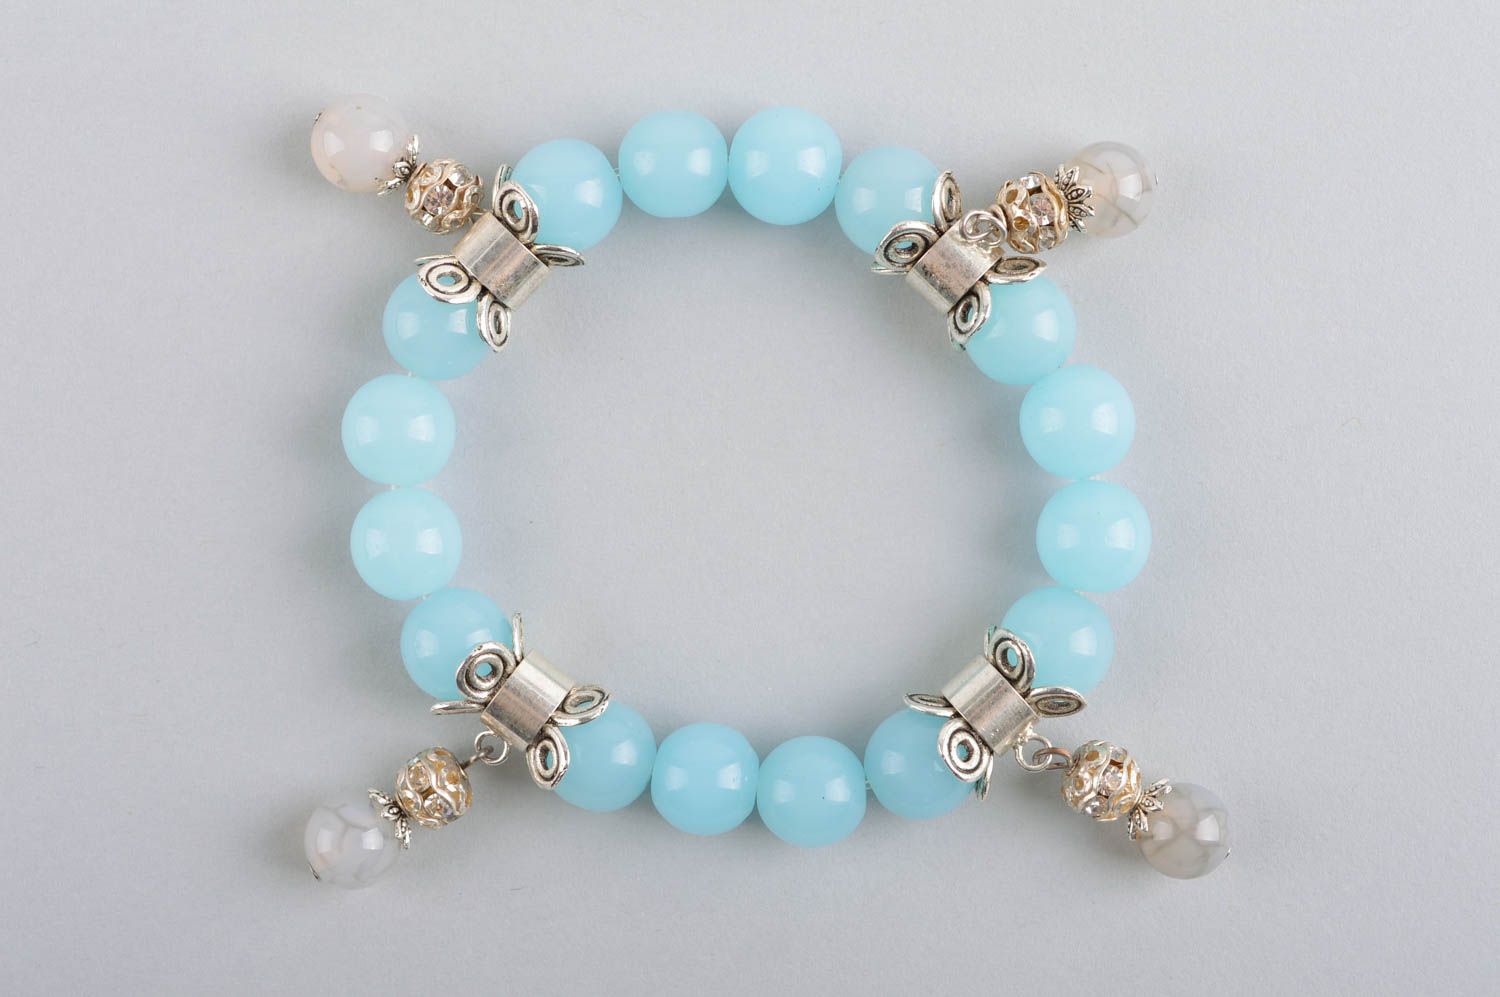 Handmade bracelet bead bracelet gemstone jewelry fashion accessories gift ideas photo 2